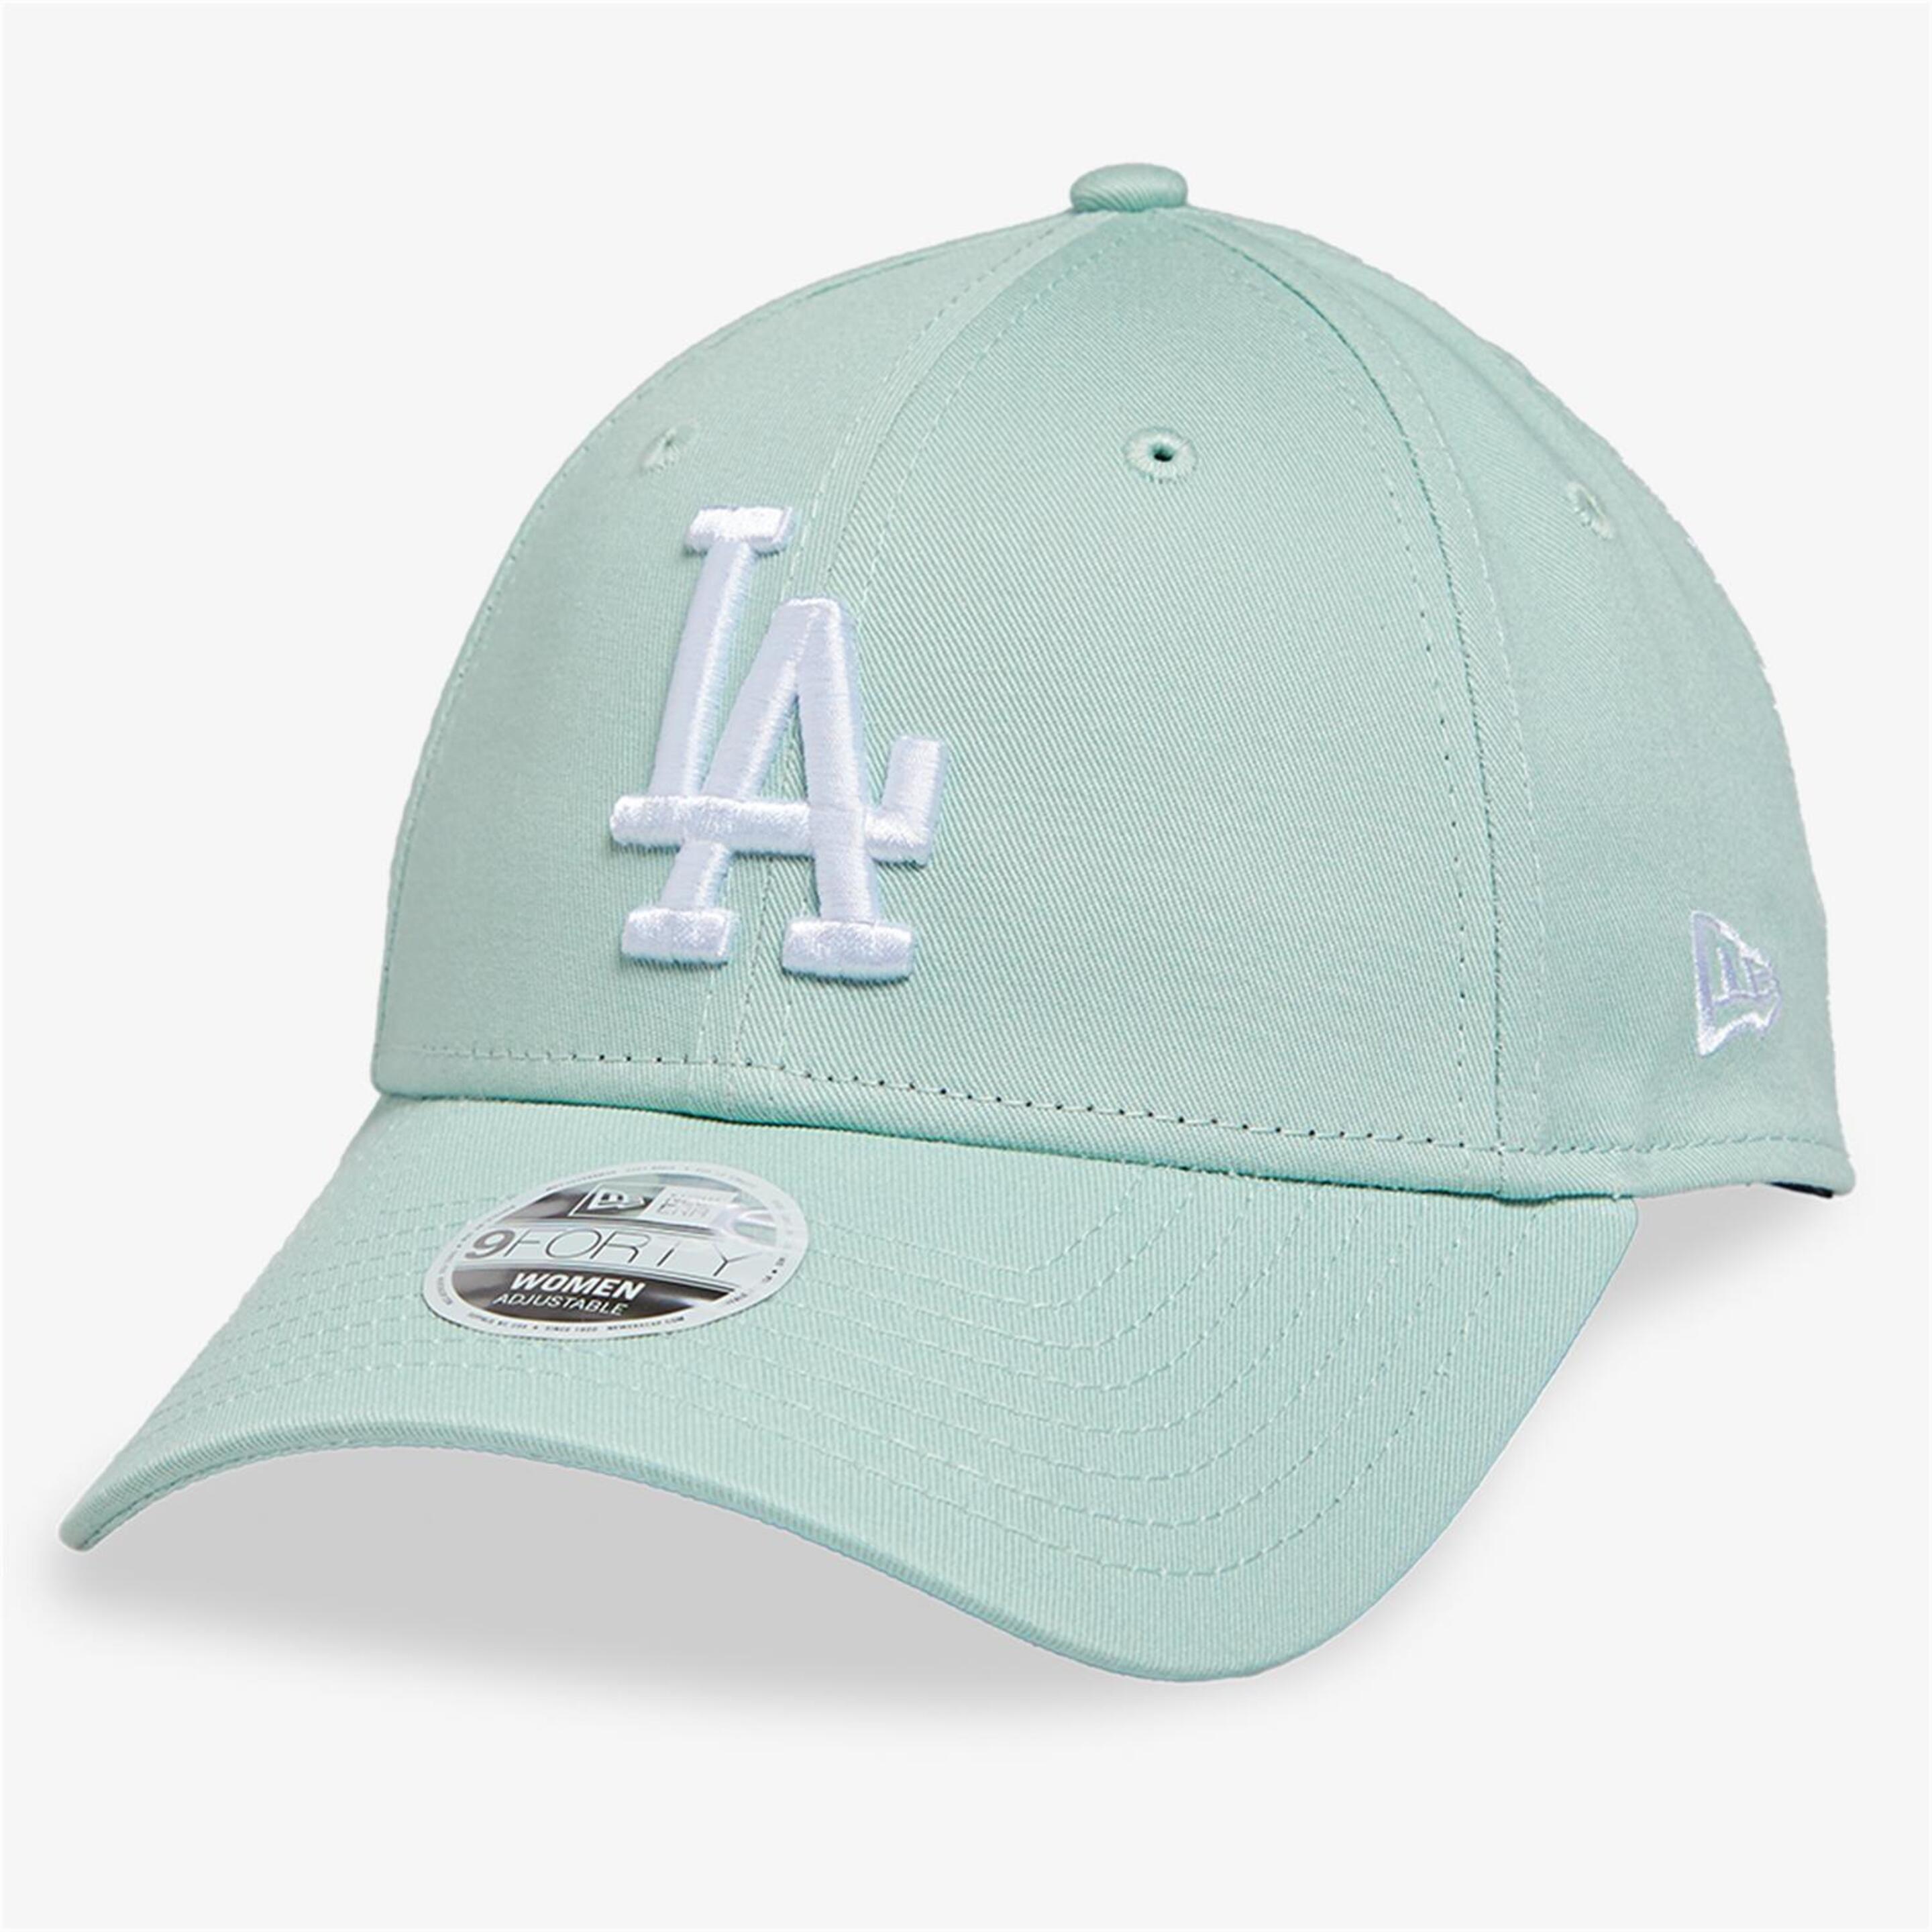 New Era La Dodgers - verde - Gorra